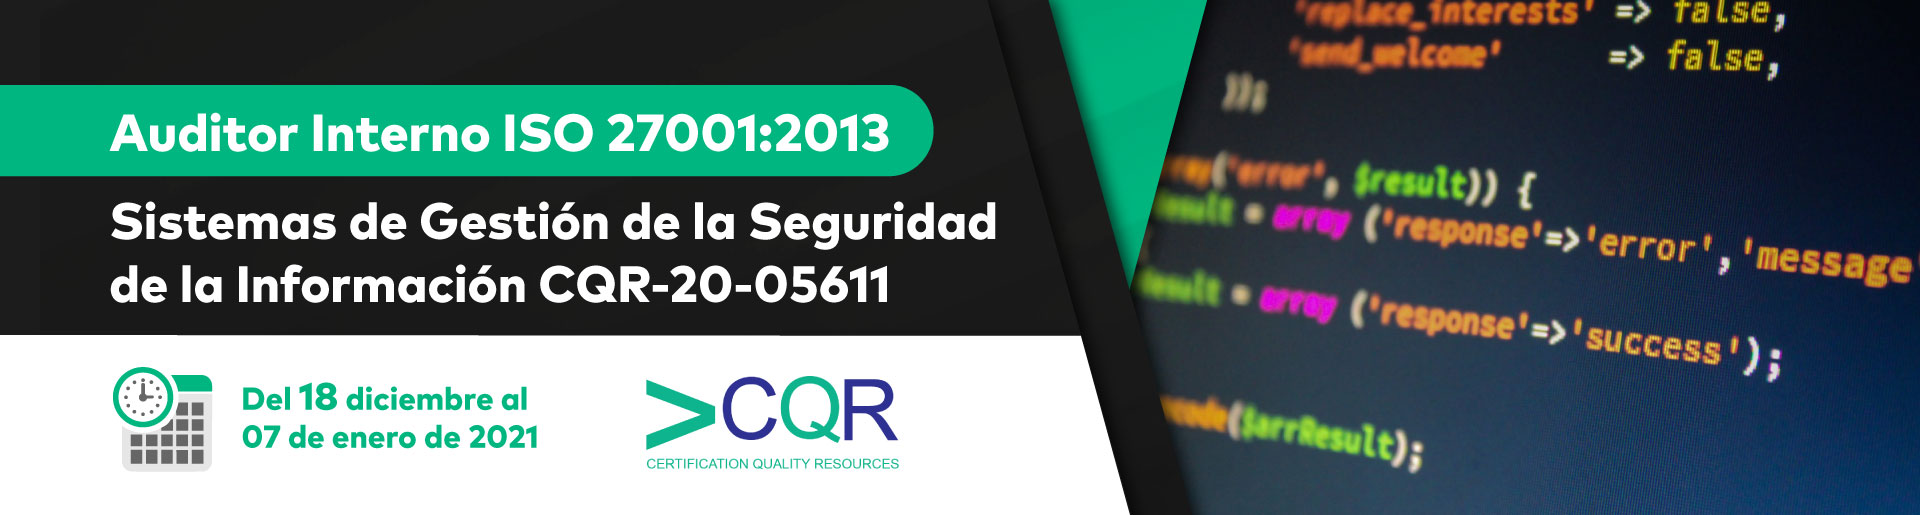 Auditor Interno ISO 27001 CQR